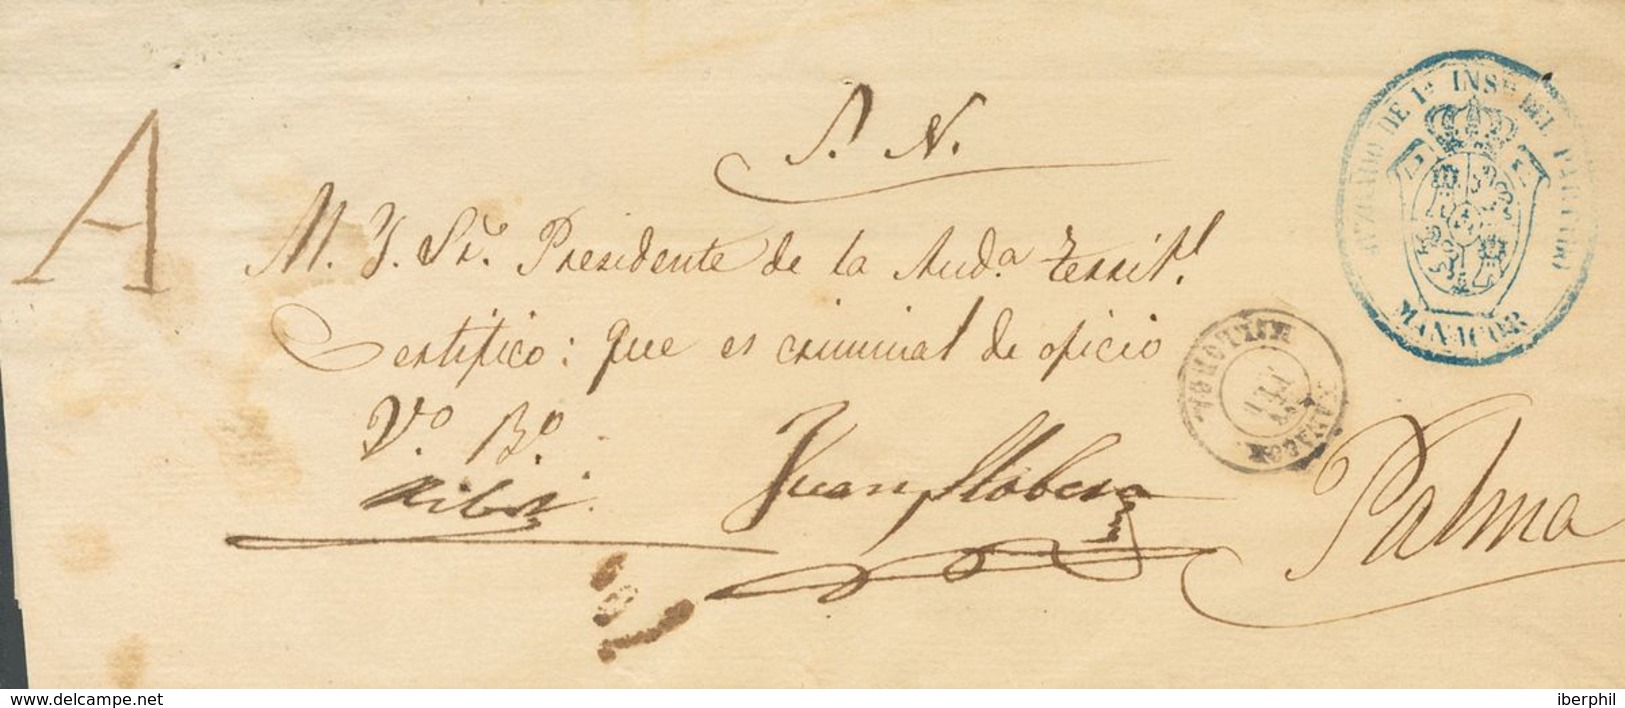 Prefilatelia, Baleares. Sobre. 1872. Plica Judicial De MANACOR A PALMA DE MALLORCA. Marca "A", De Abono Manuscrita Y Fec - ...-1850 Vorphilatelie